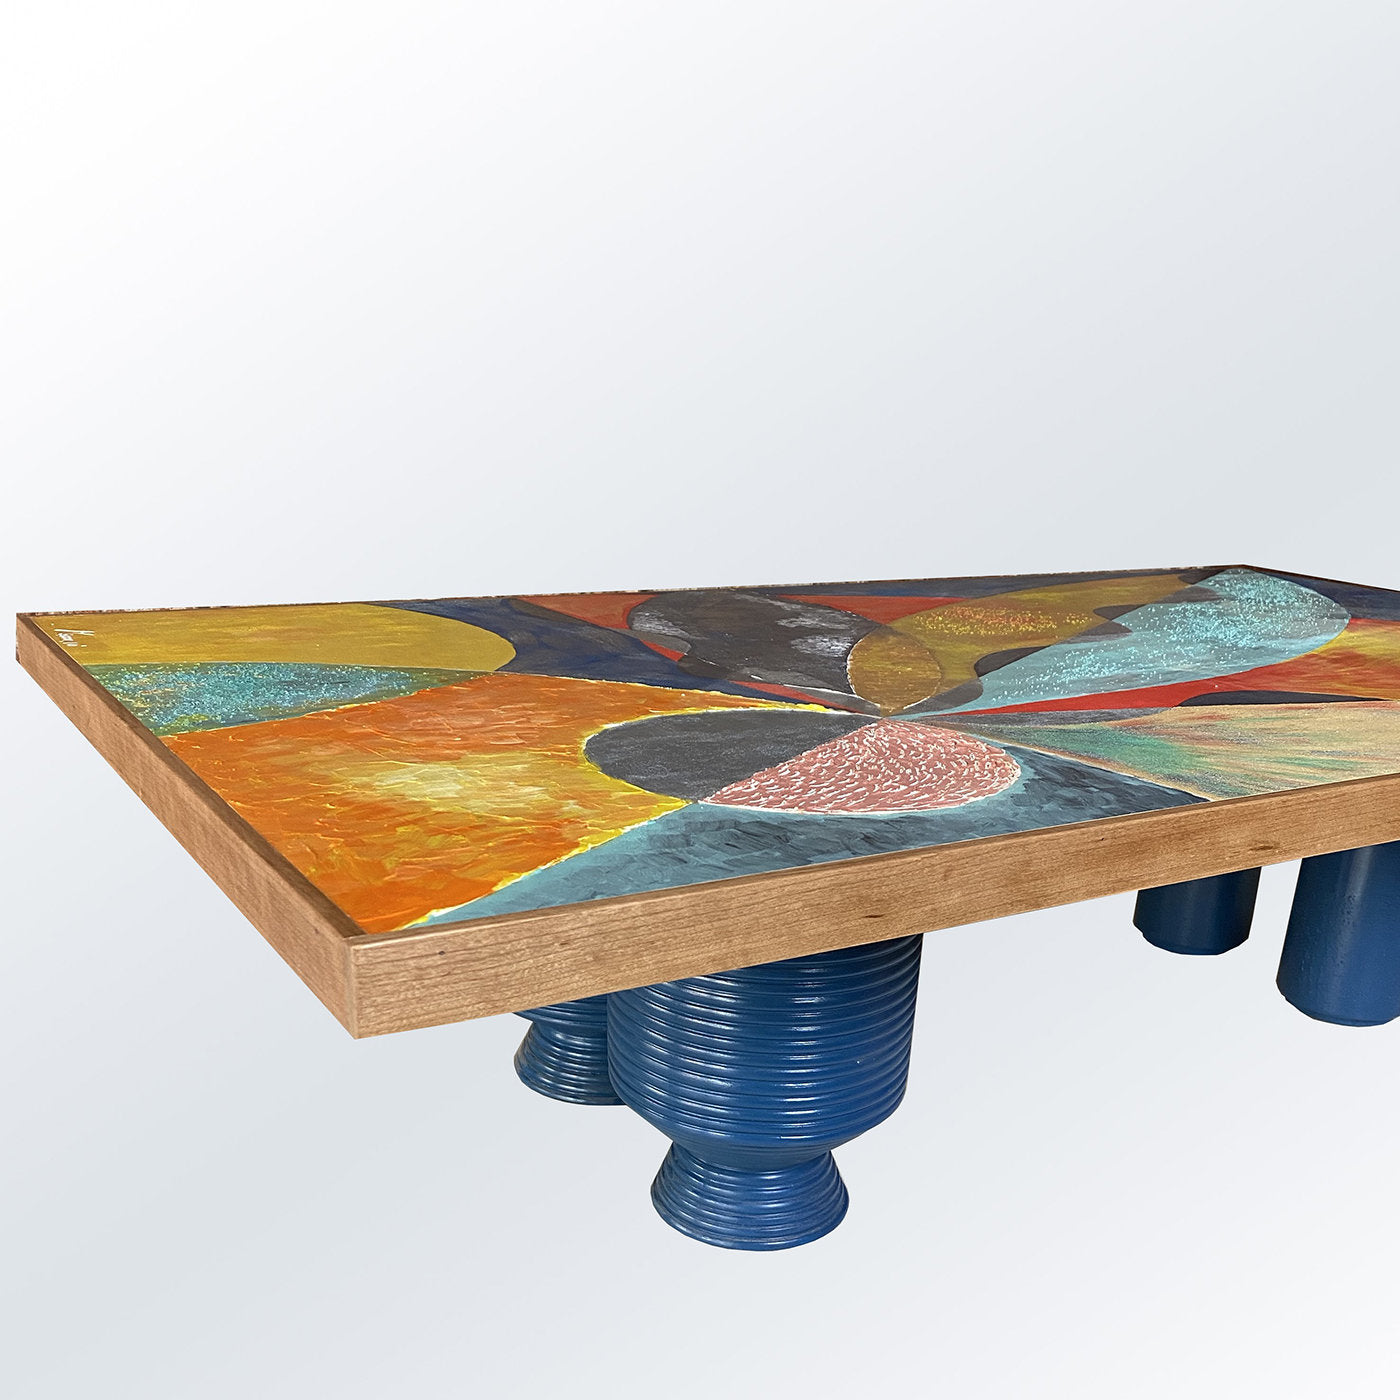 Atlantide Rectangular Coffee Table by Mascia Meccani - Alternative view 4